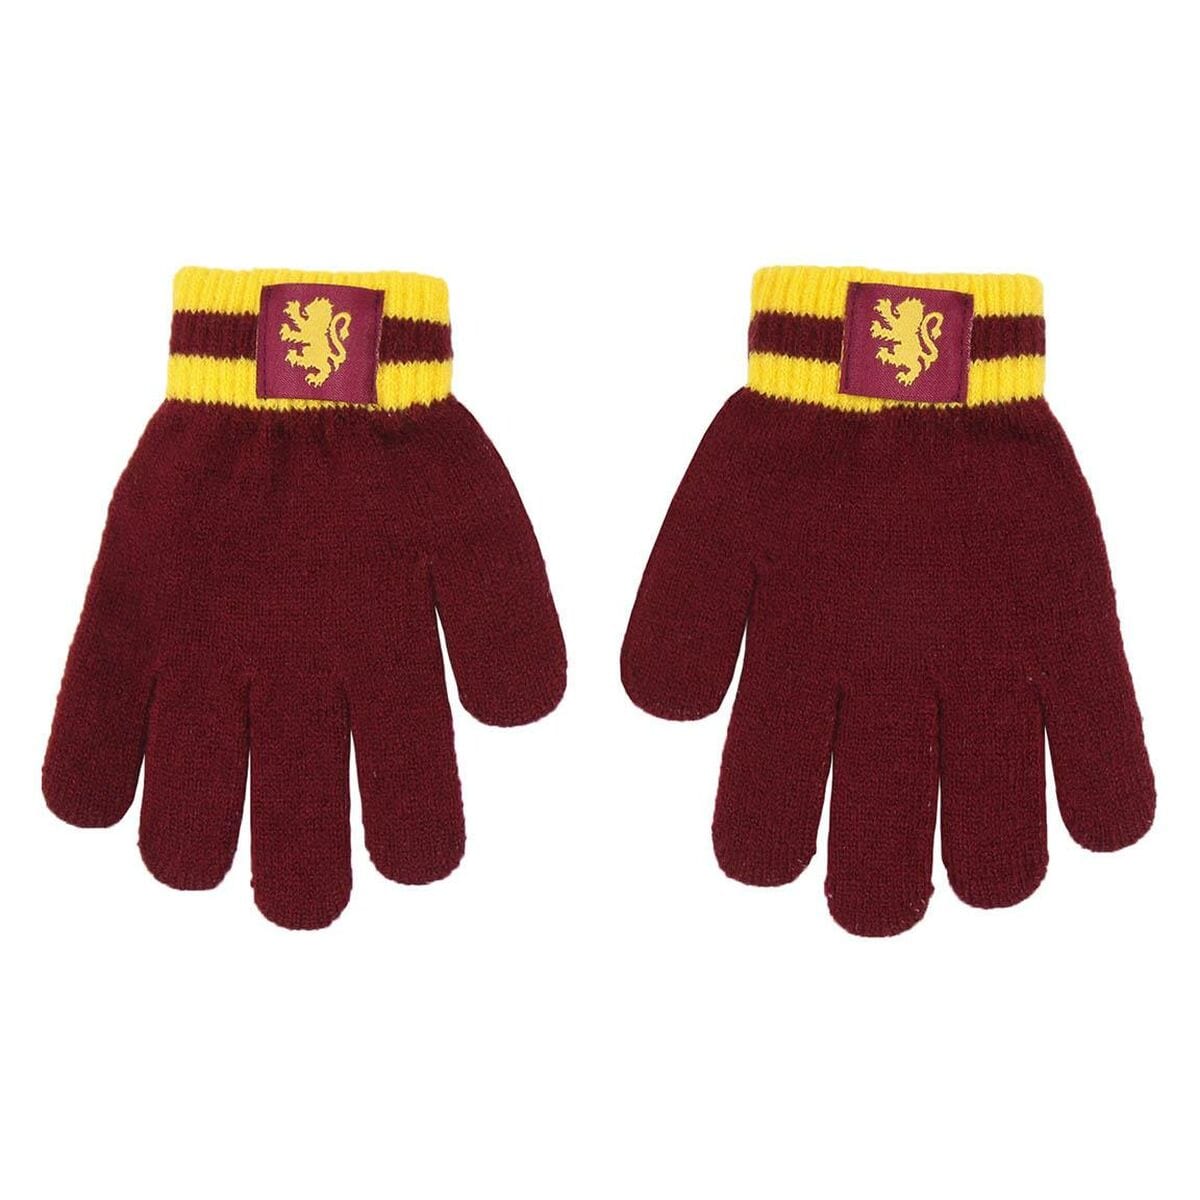 Harry Potter Mode | Accessoires > Accessoires > Mützen und Schals Mütze, Schal und Handschuhe Harry Potter Rot